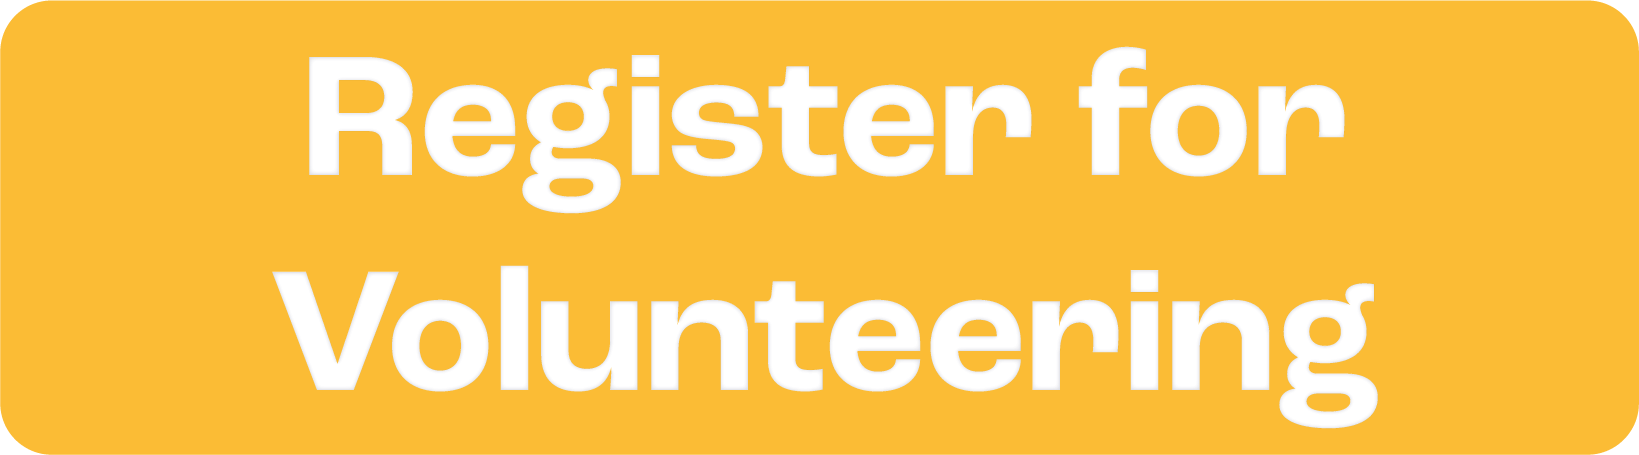 Register for volunteering